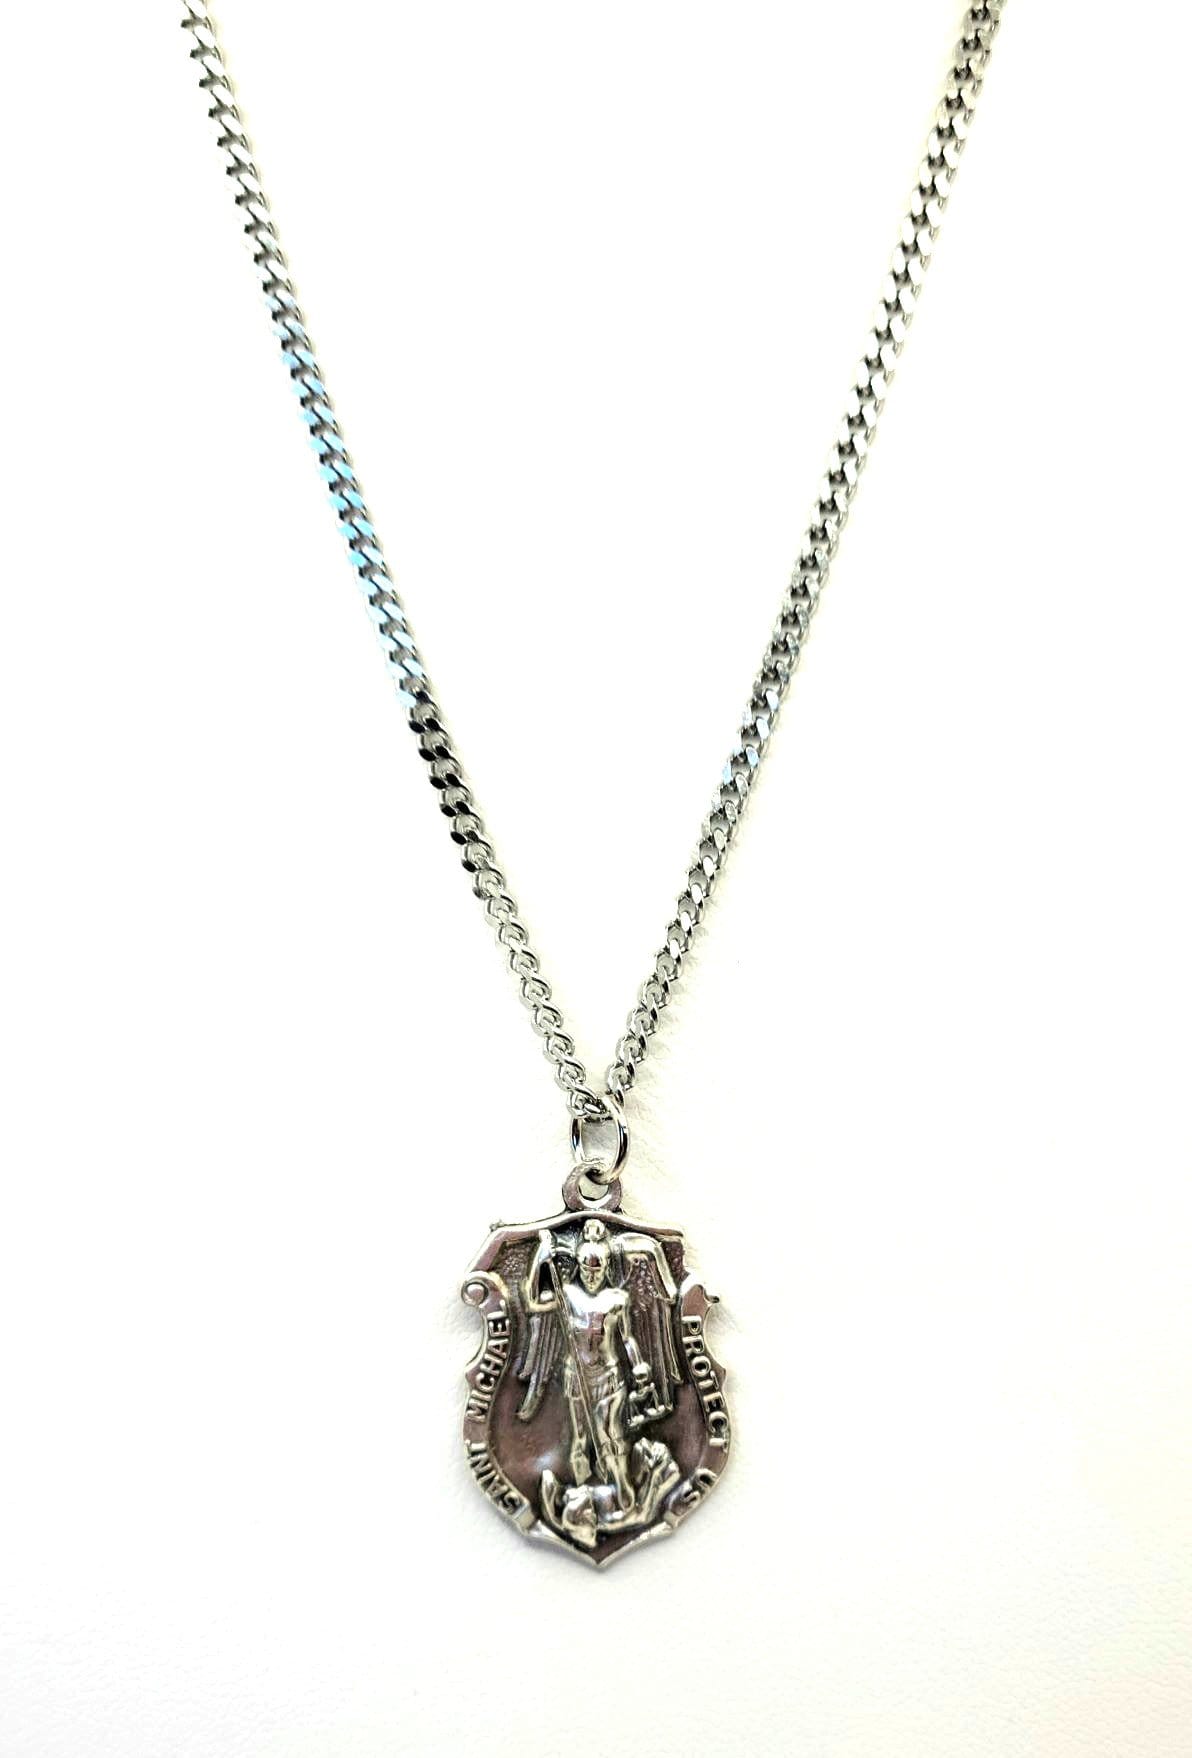 CHENGXUN Black Titanium Steel Keel Necklace Cross Necklace Personality  Jewelry Christian Catholic Jewelry Gifts for Men Women - AliExpress